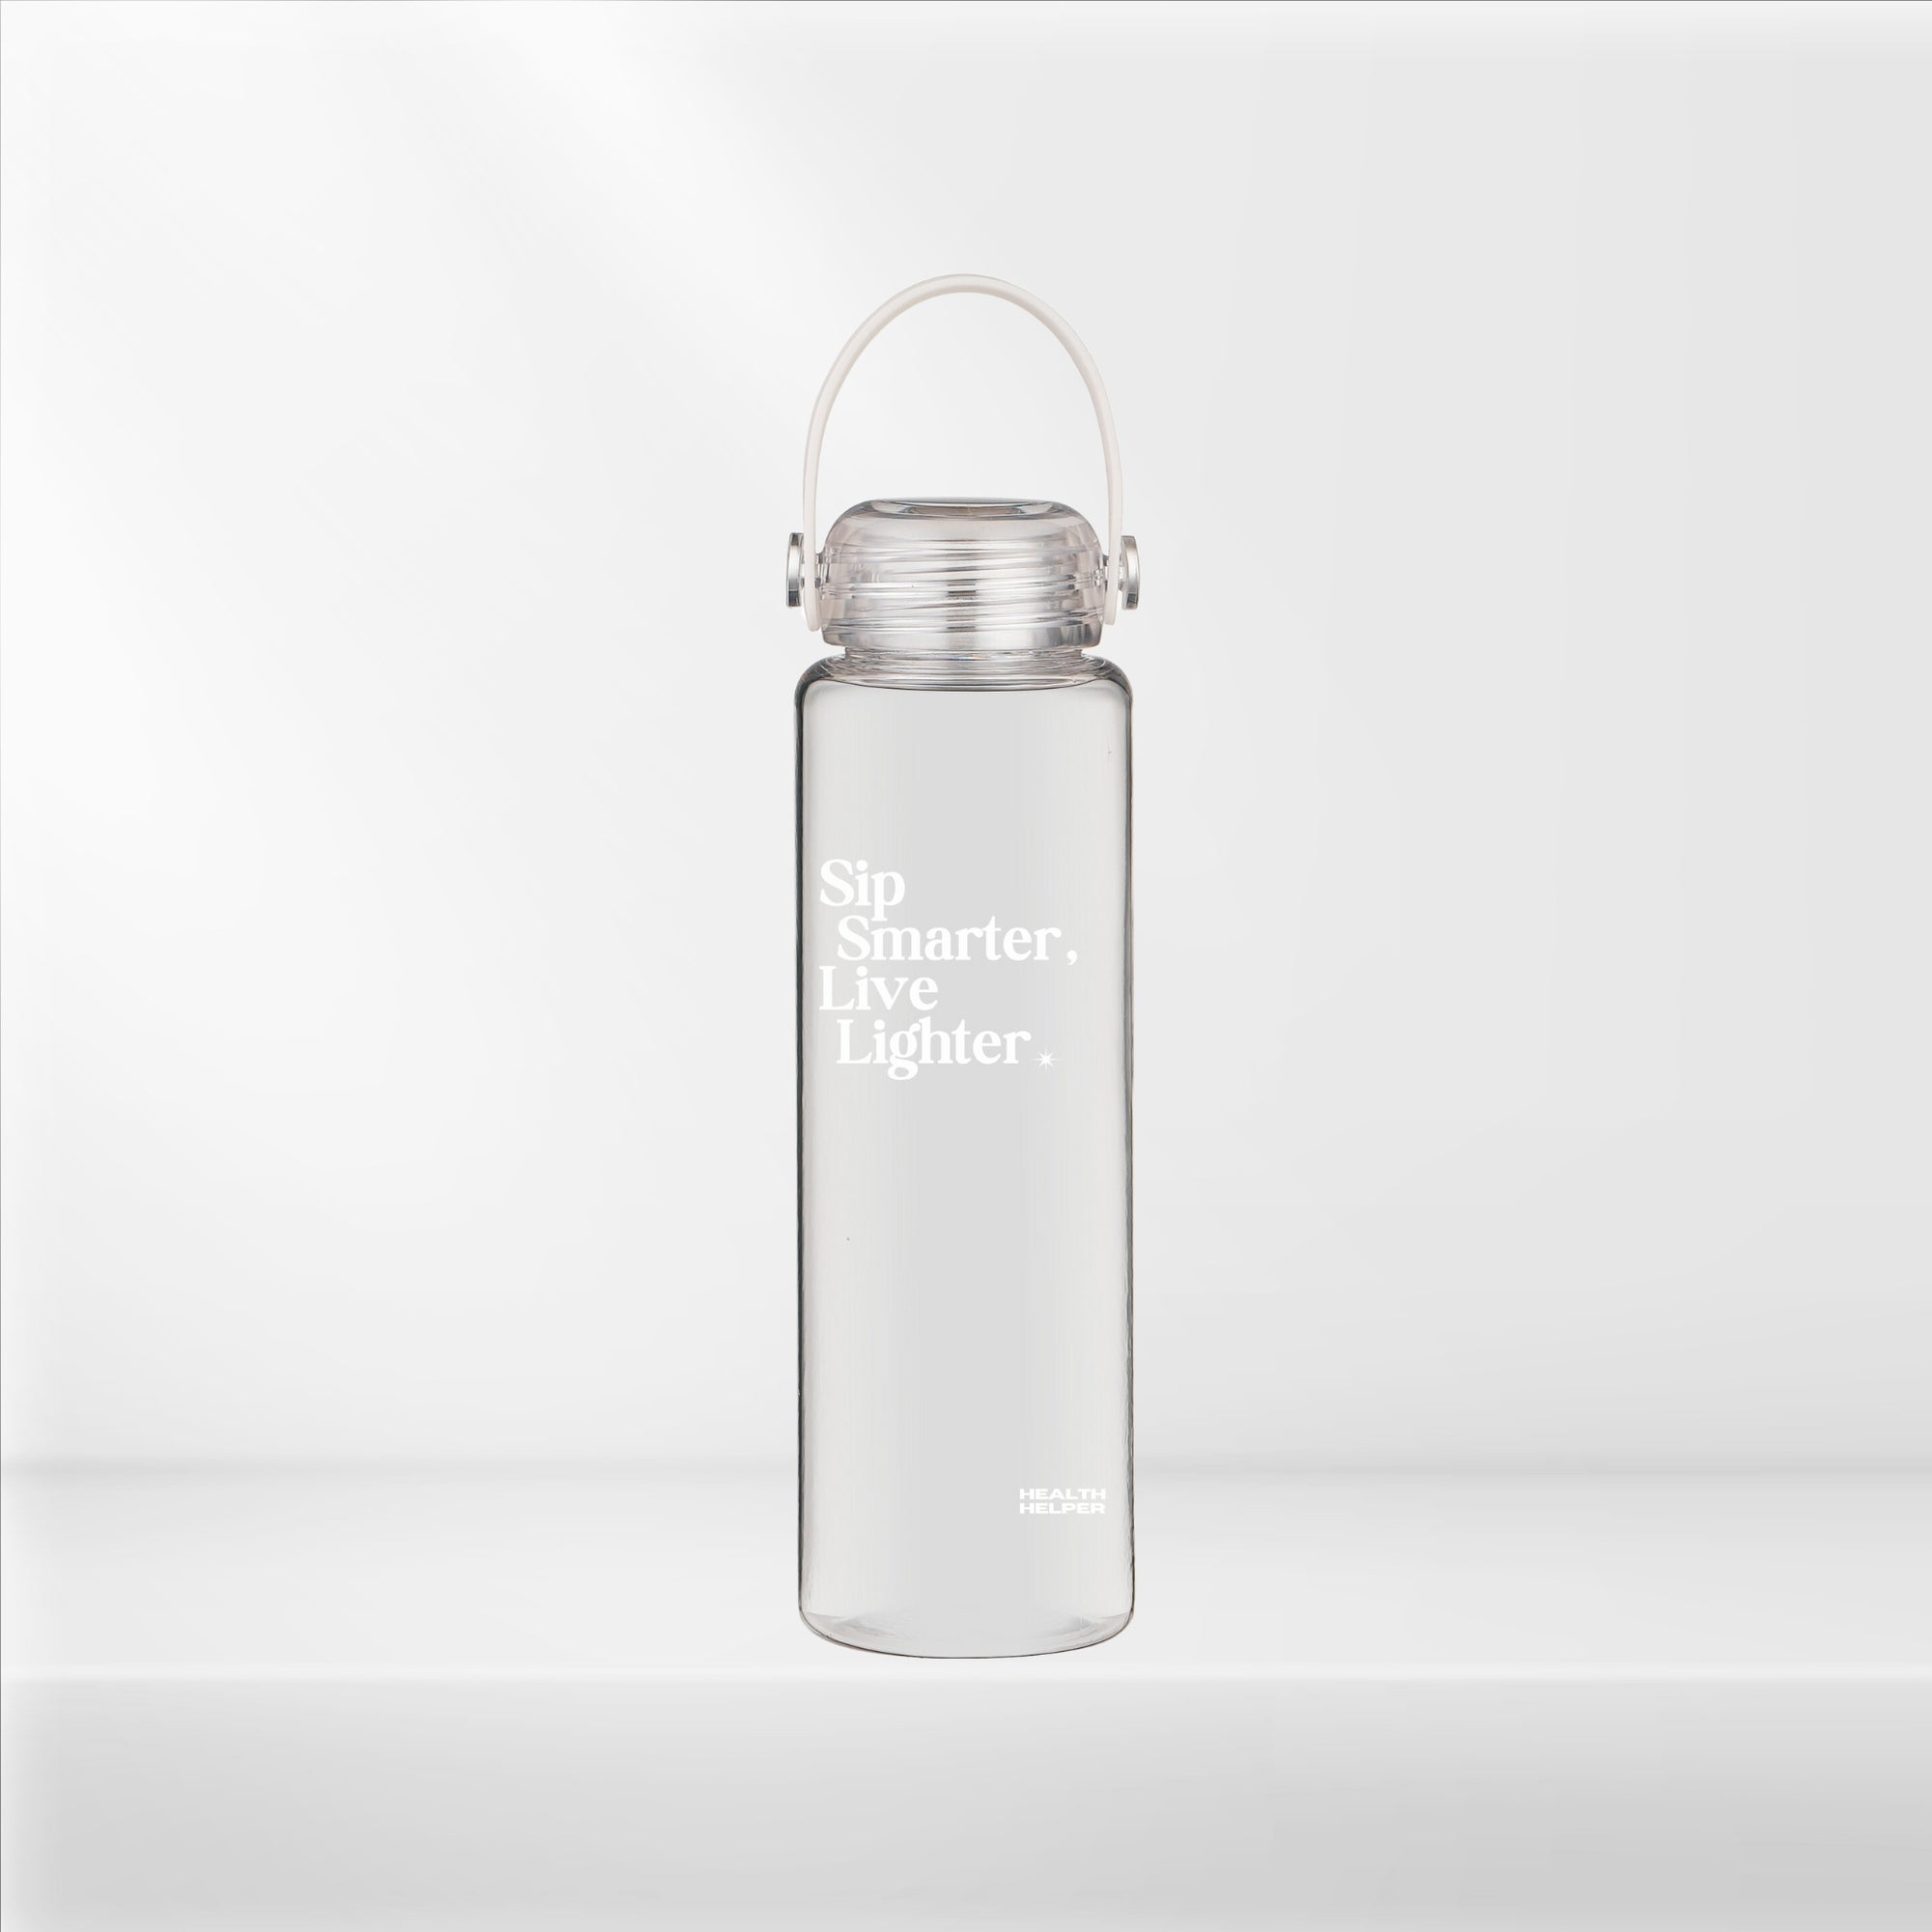 Sip Smarter, Live Lighter Water Bottle by Health Helper